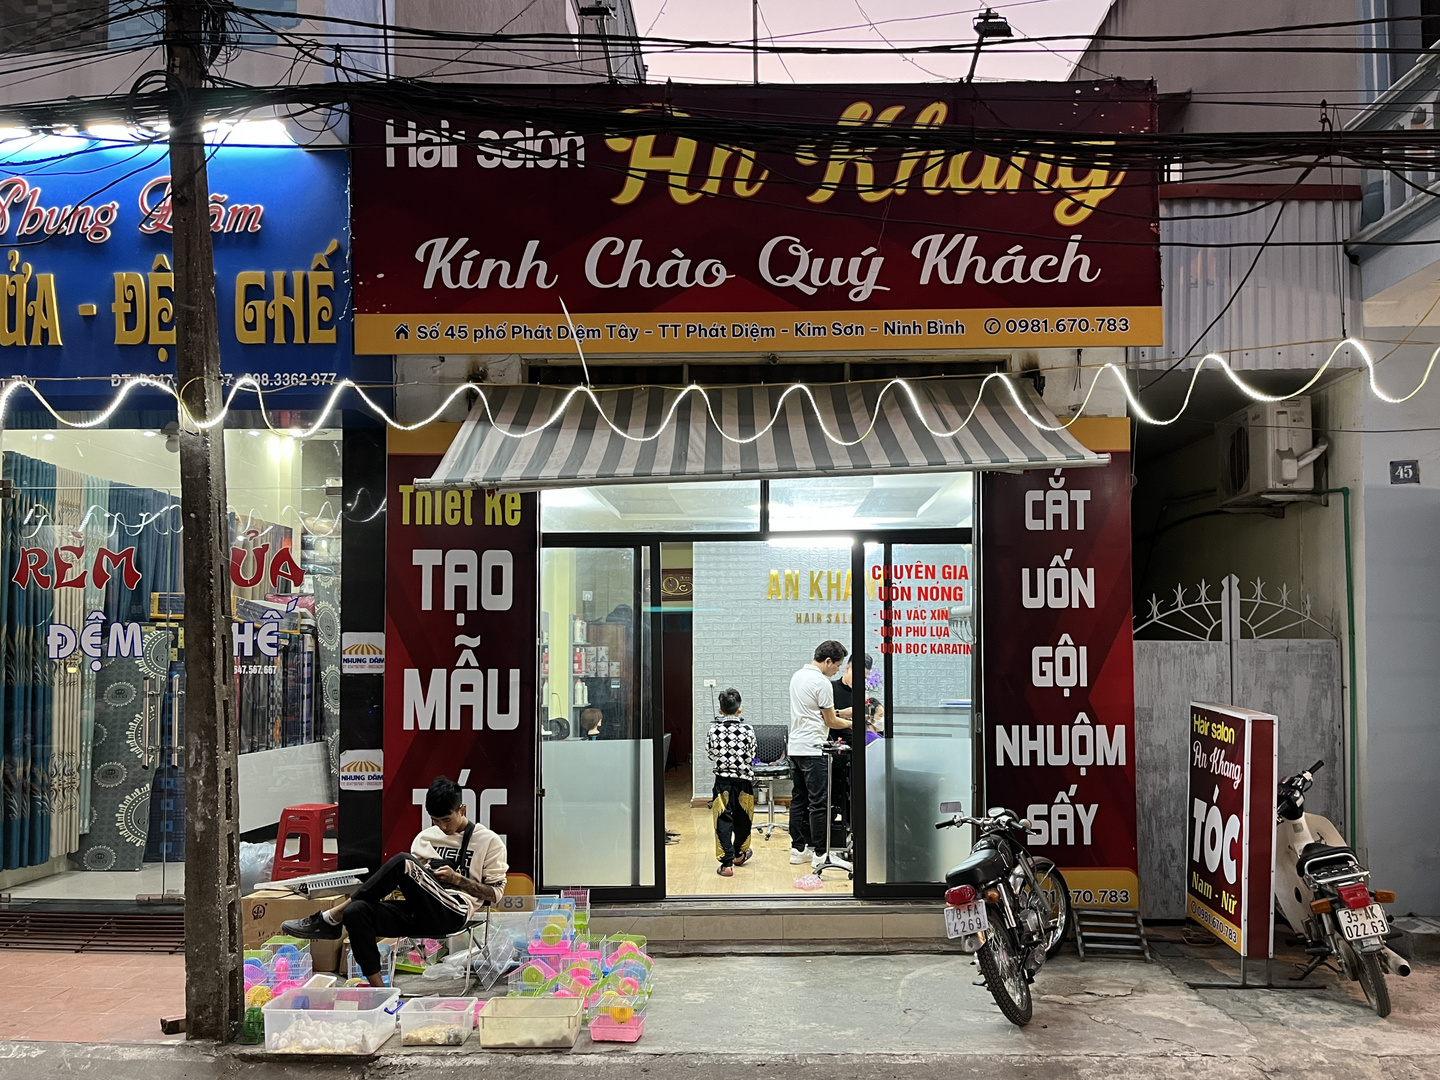 Hair Salon Ang Khan in Phát Diem (Vietnam)